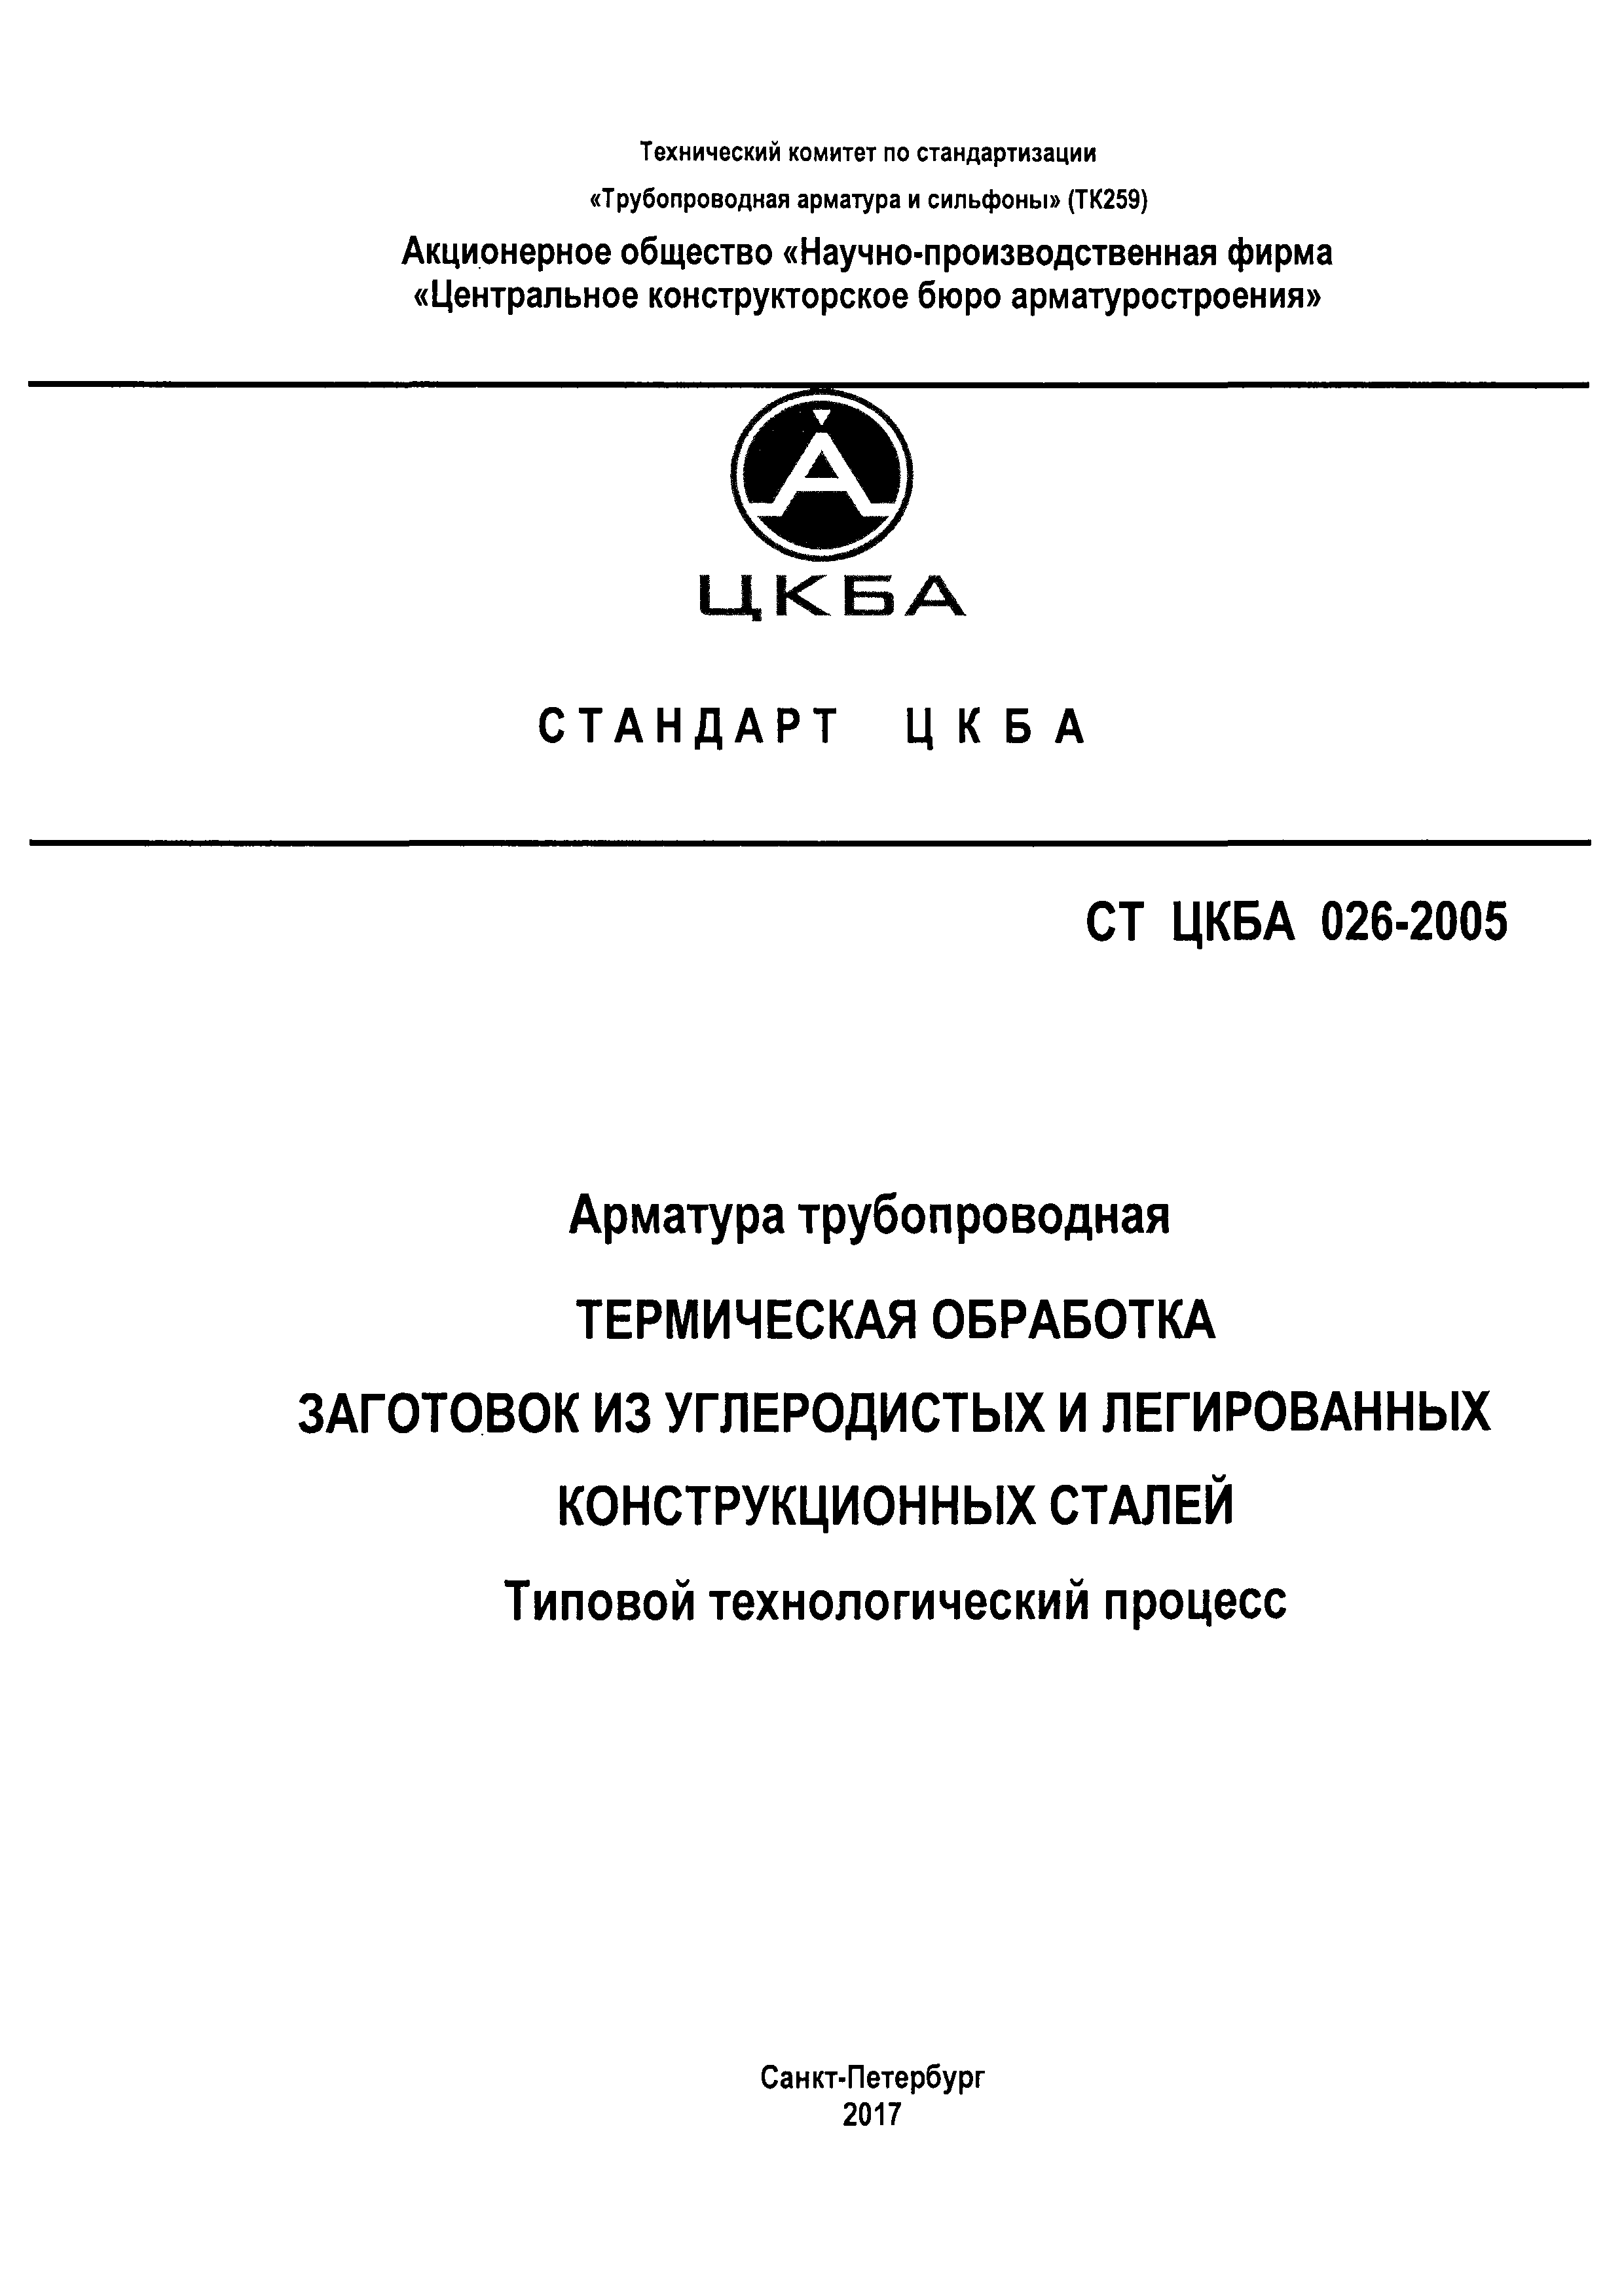 СТ ЦКБА 026-2005